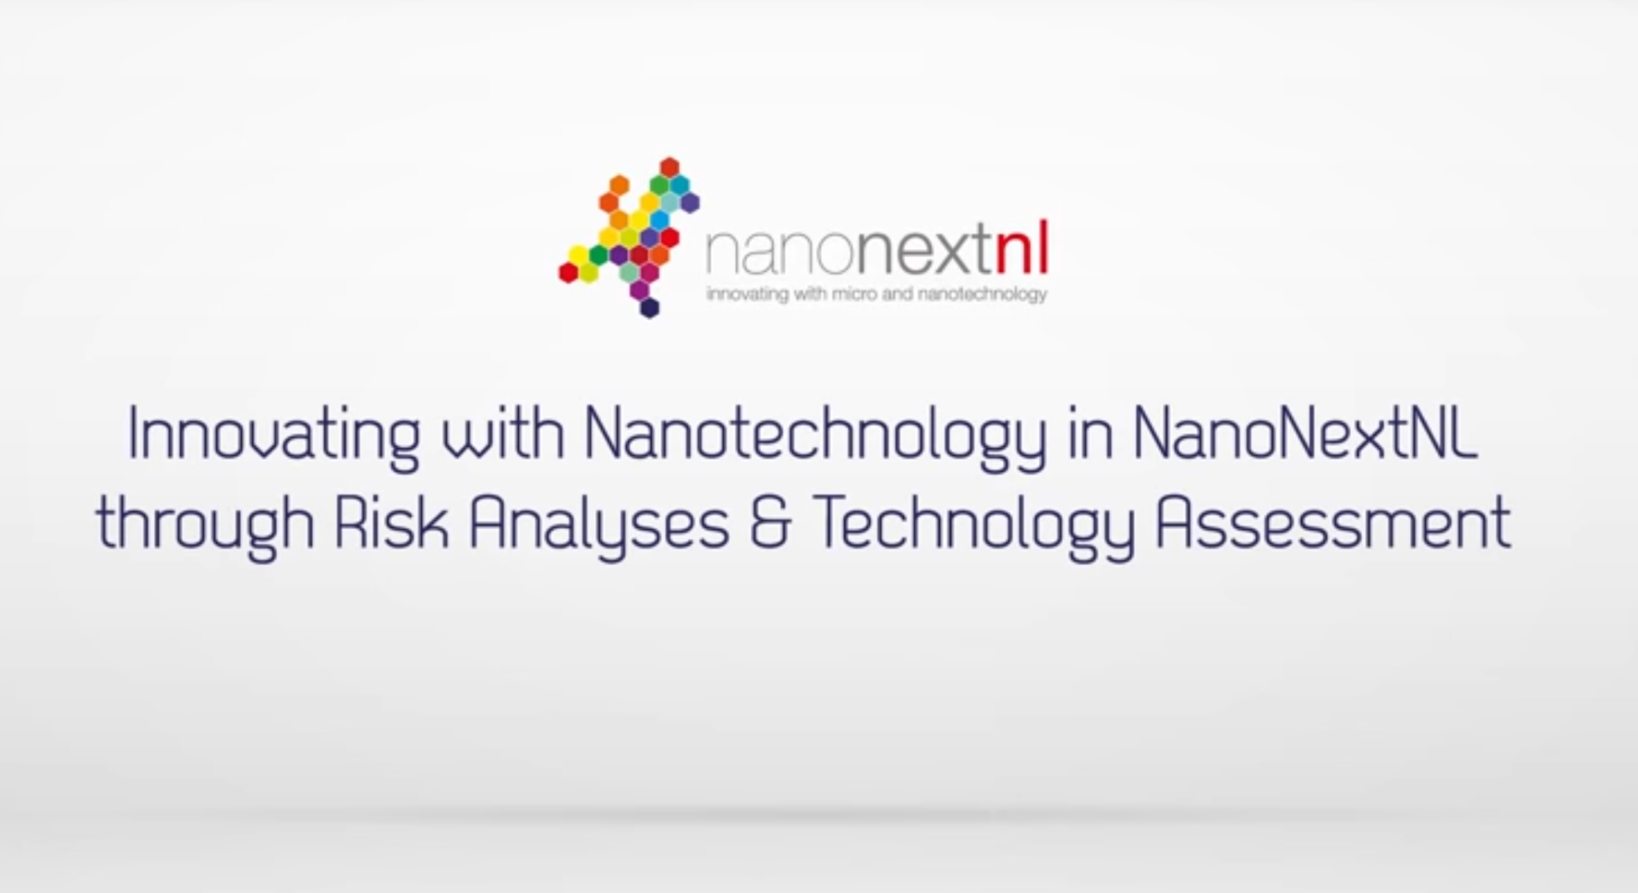 nanonextnl